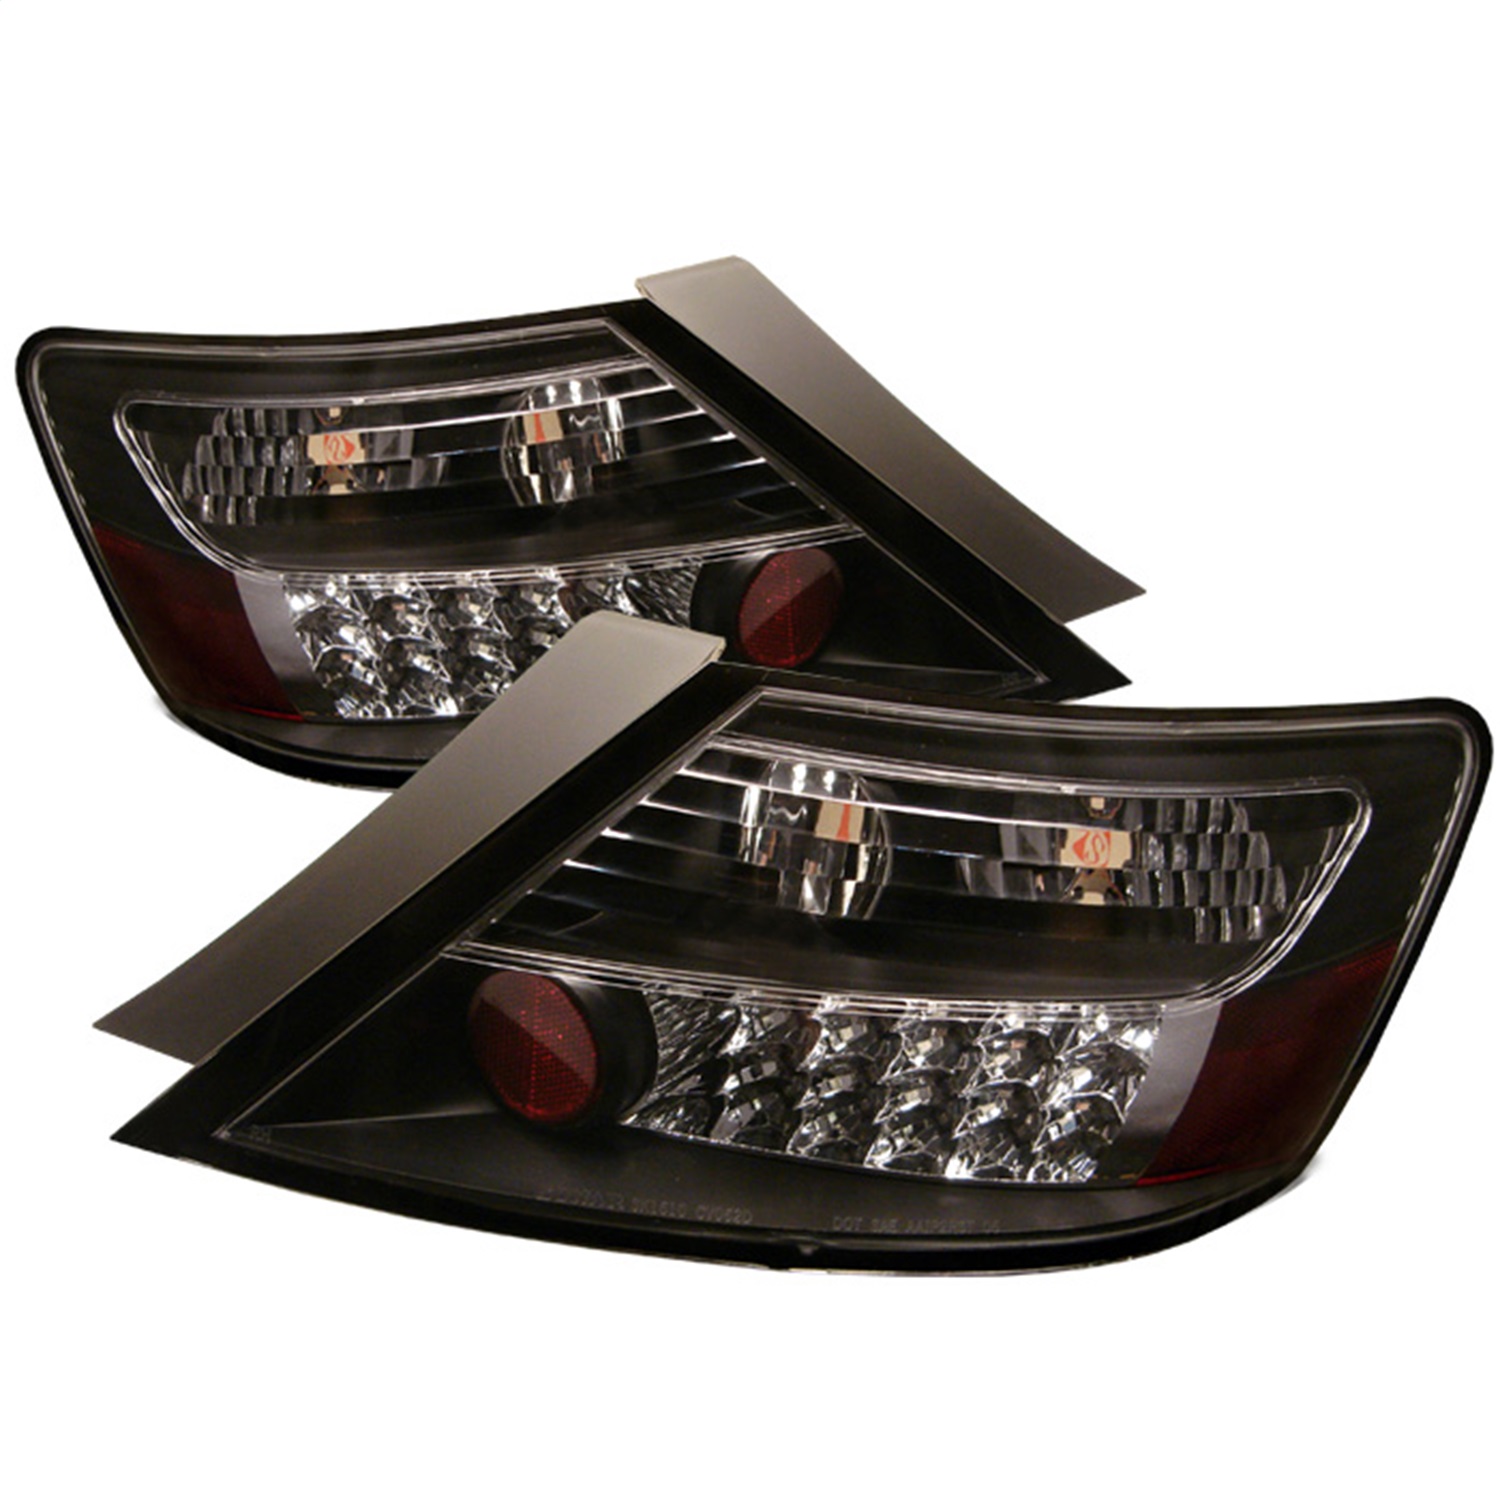 Spyder Auto 5004499 LED Tail Lights Fits 06-08 Civic